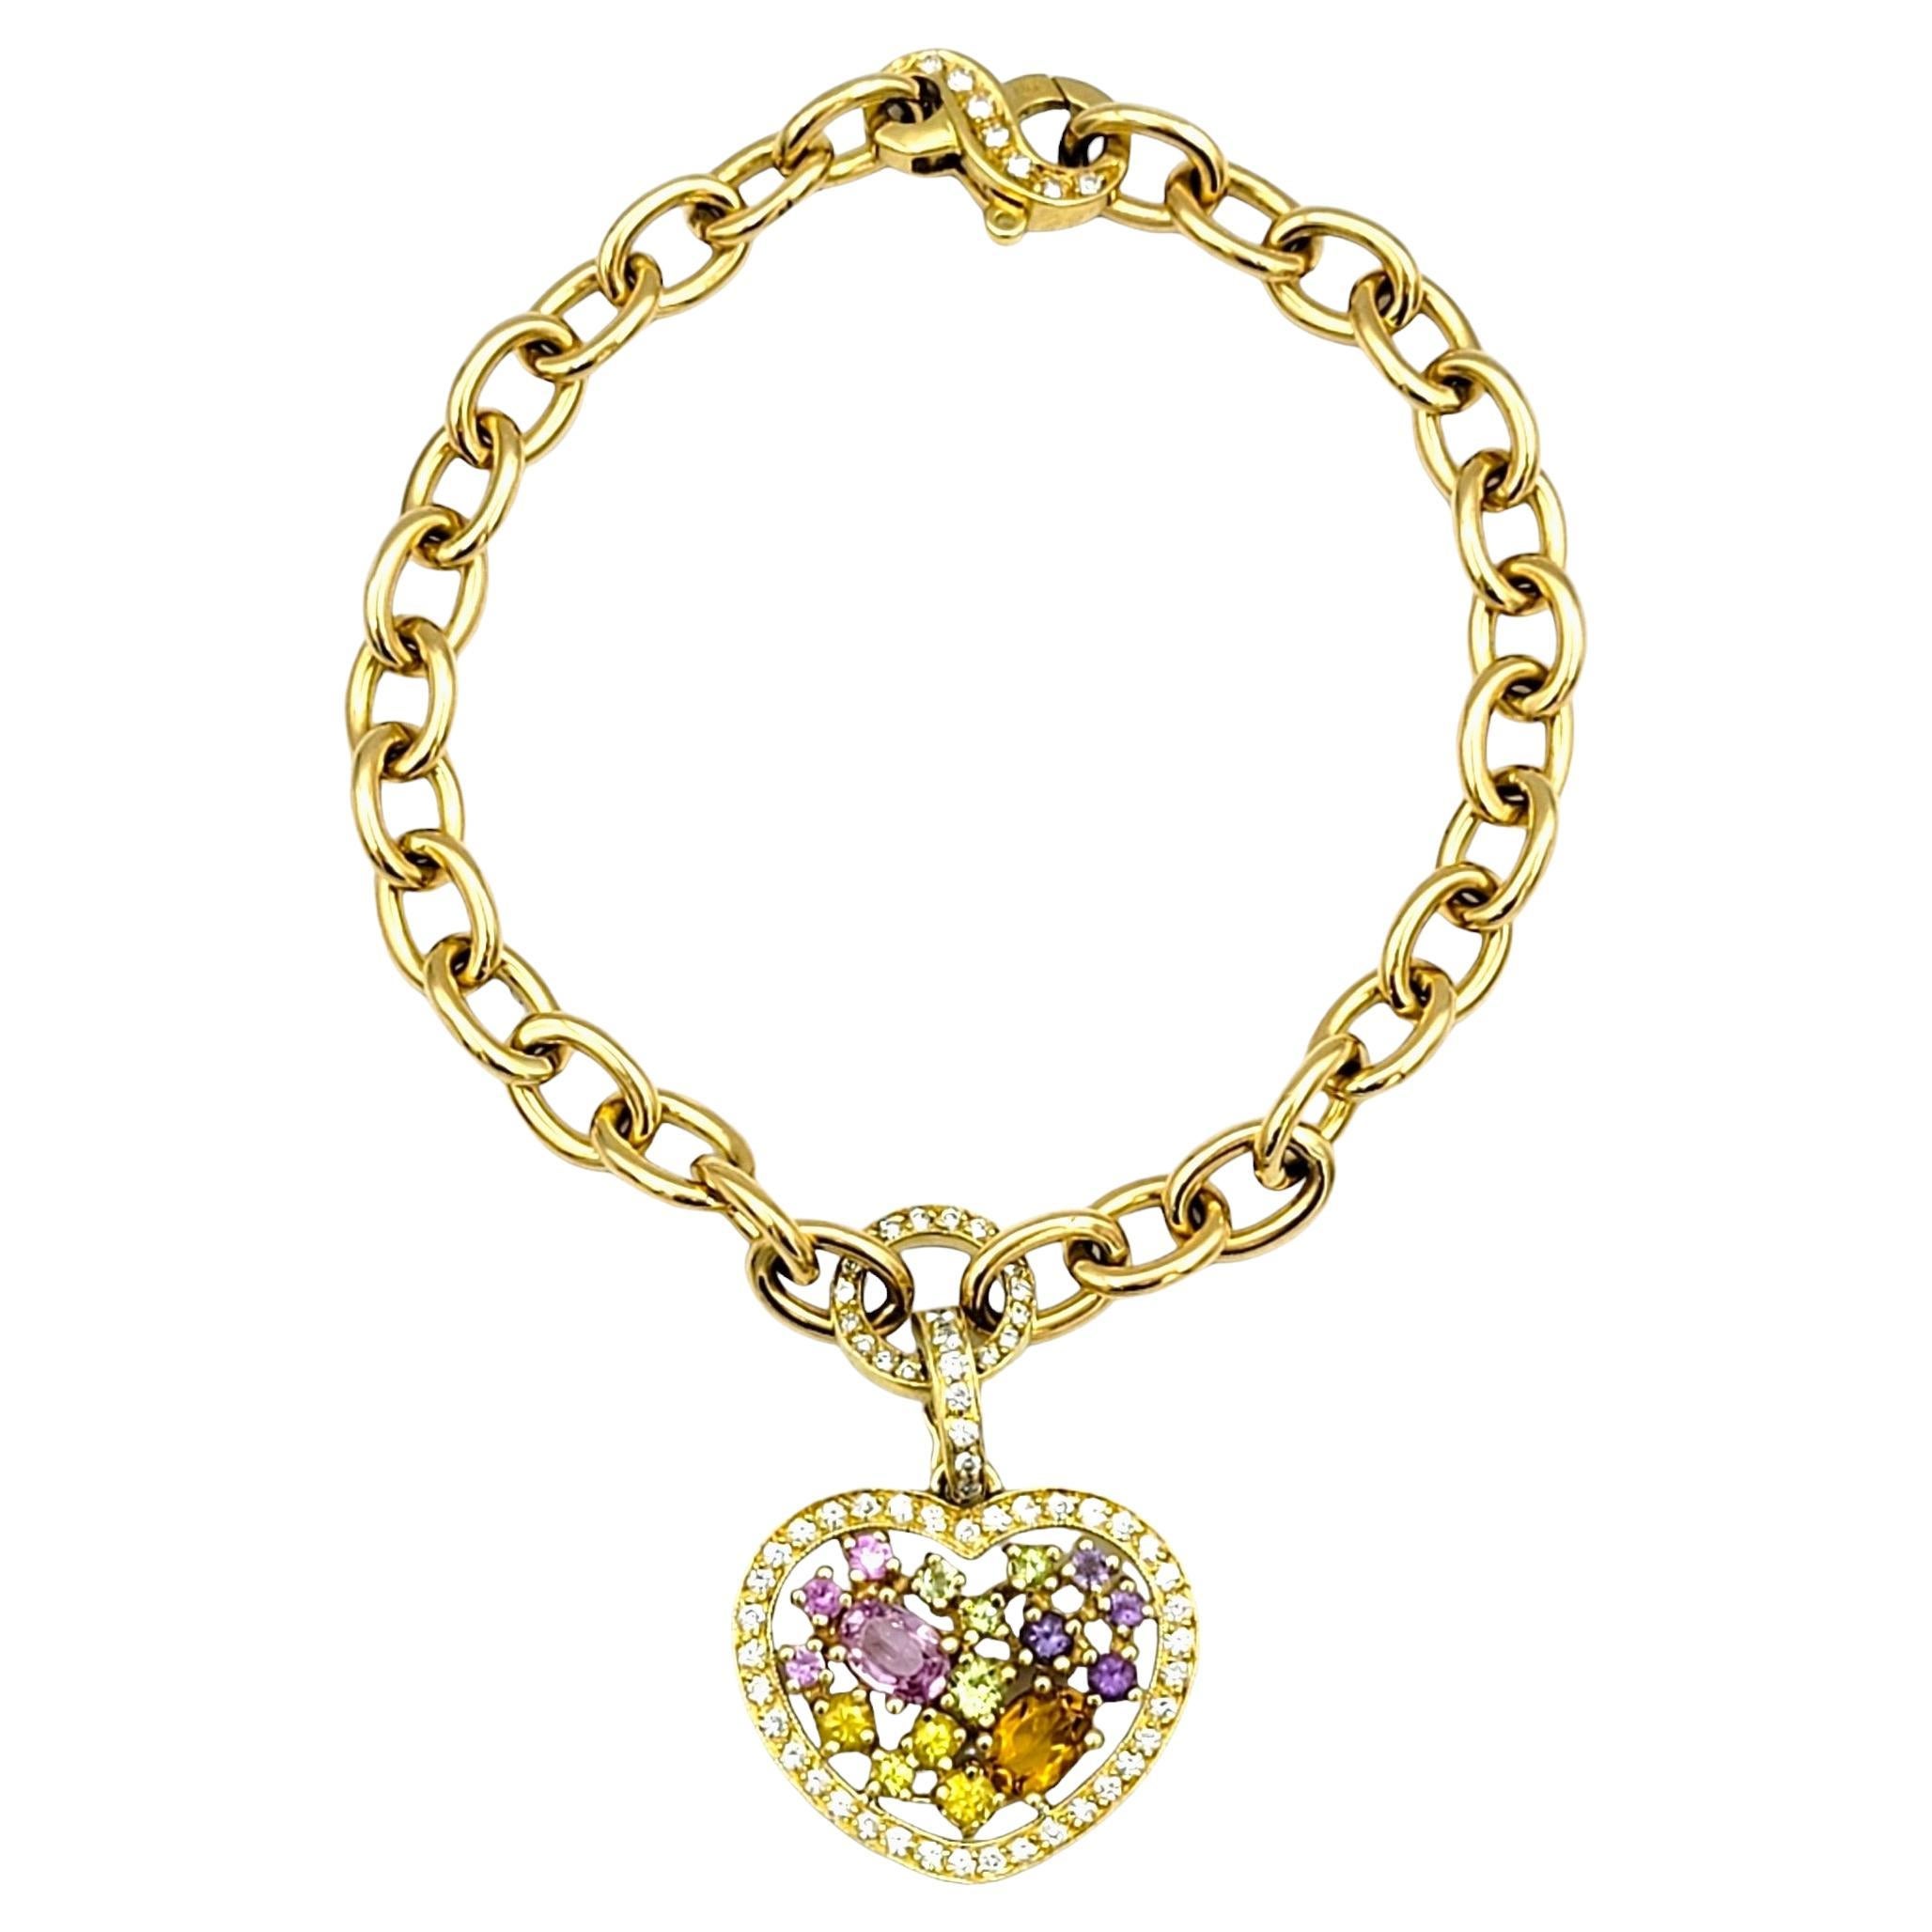 Multi Colored Gemstone and Diamond Heart Charm Bracelet in 18 Karat Yellow Gold